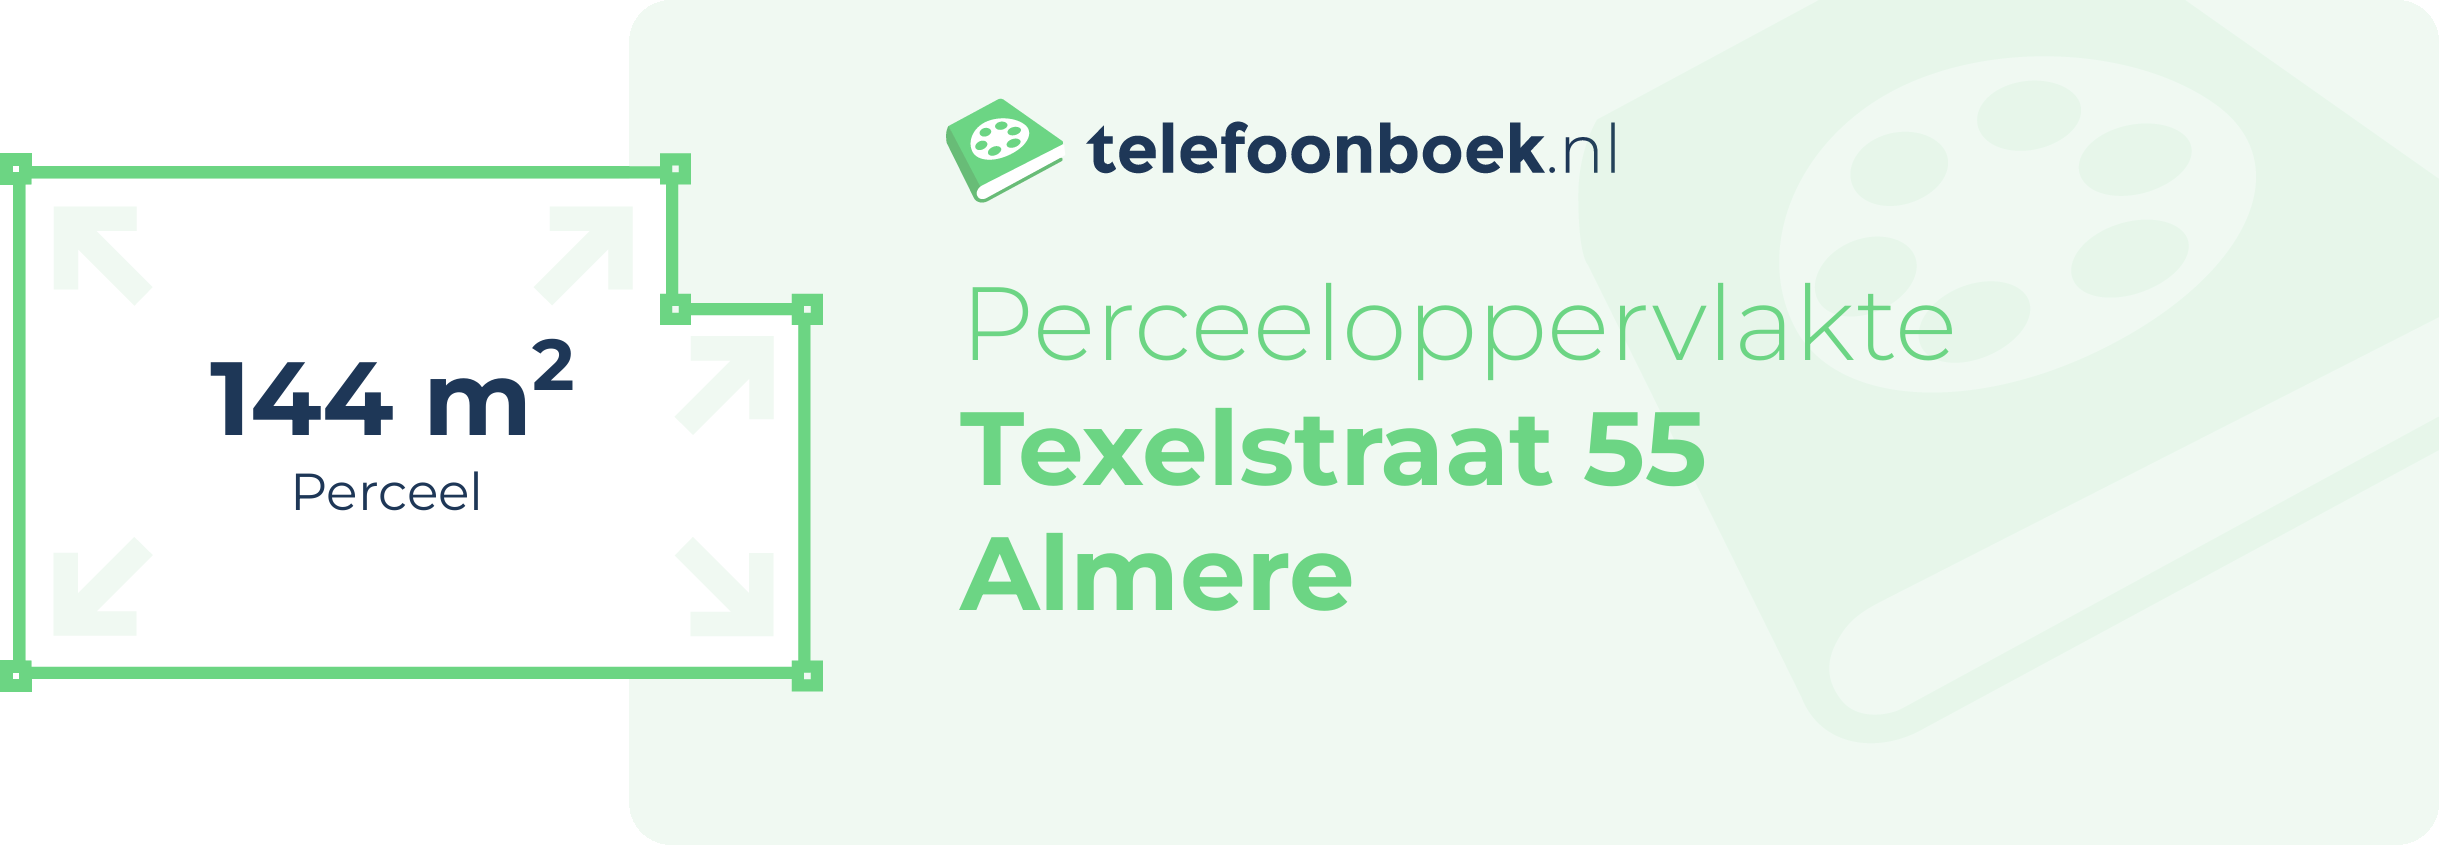 Perceeloppervlakte Texelstraat 55 Almere